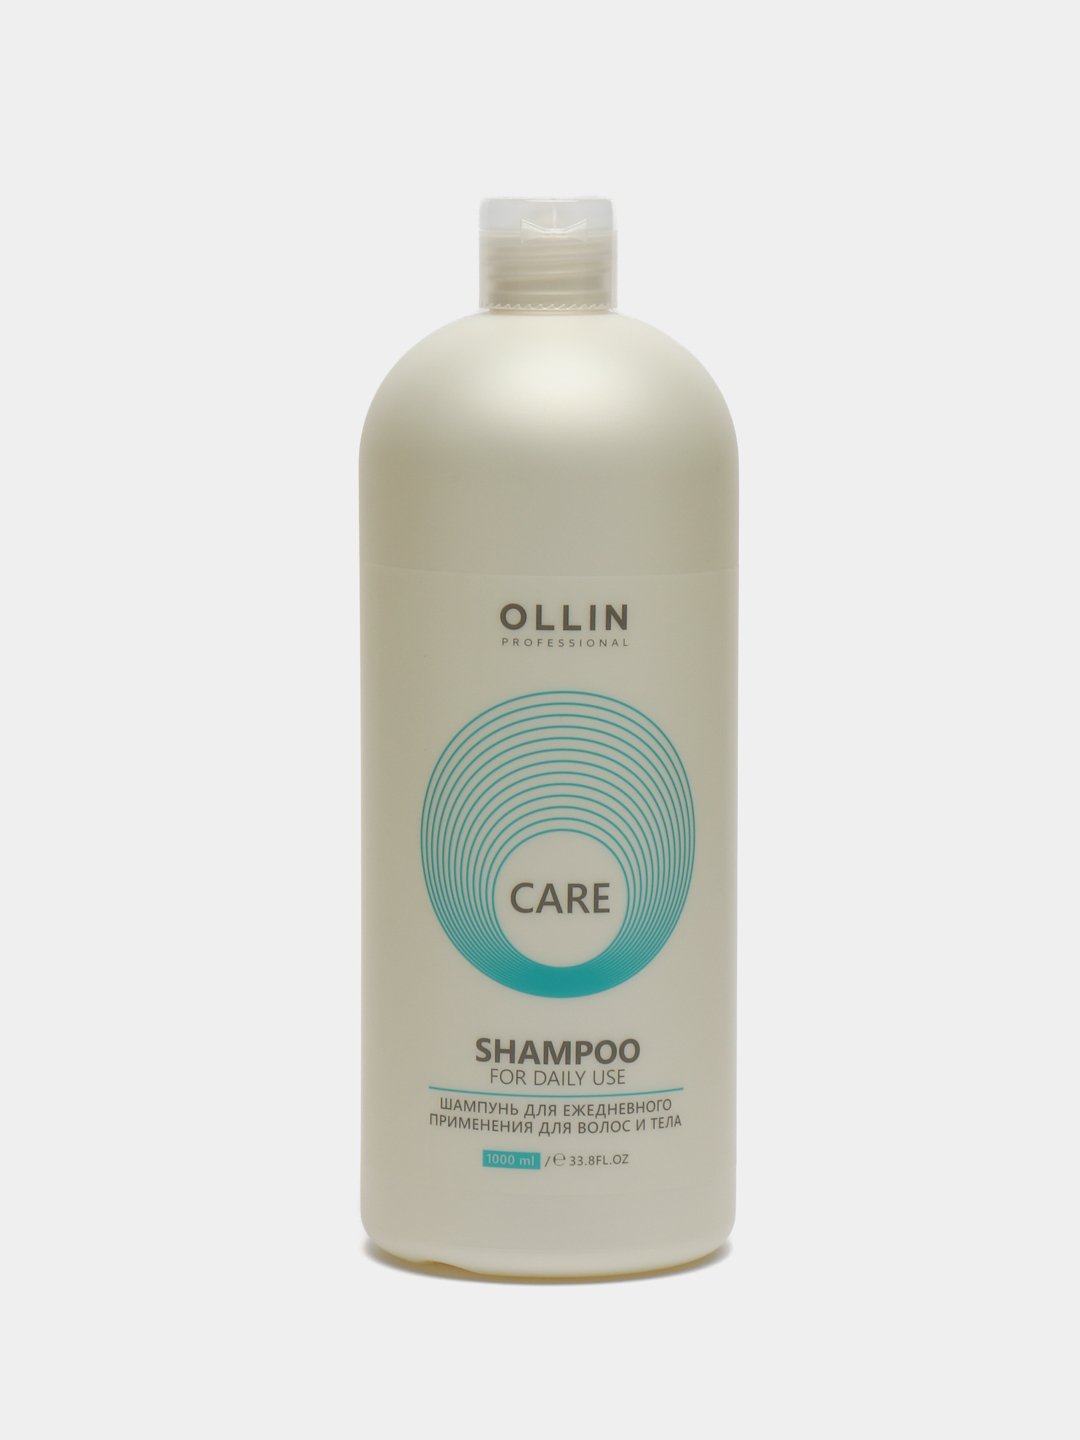 Ollin шампунь 1000мл. Оллин шампунь для ежедневного применения. Ollin Care шампунь для ежедневного применения для волос и тела 1000мл. Шампунь Оллин 3.5.